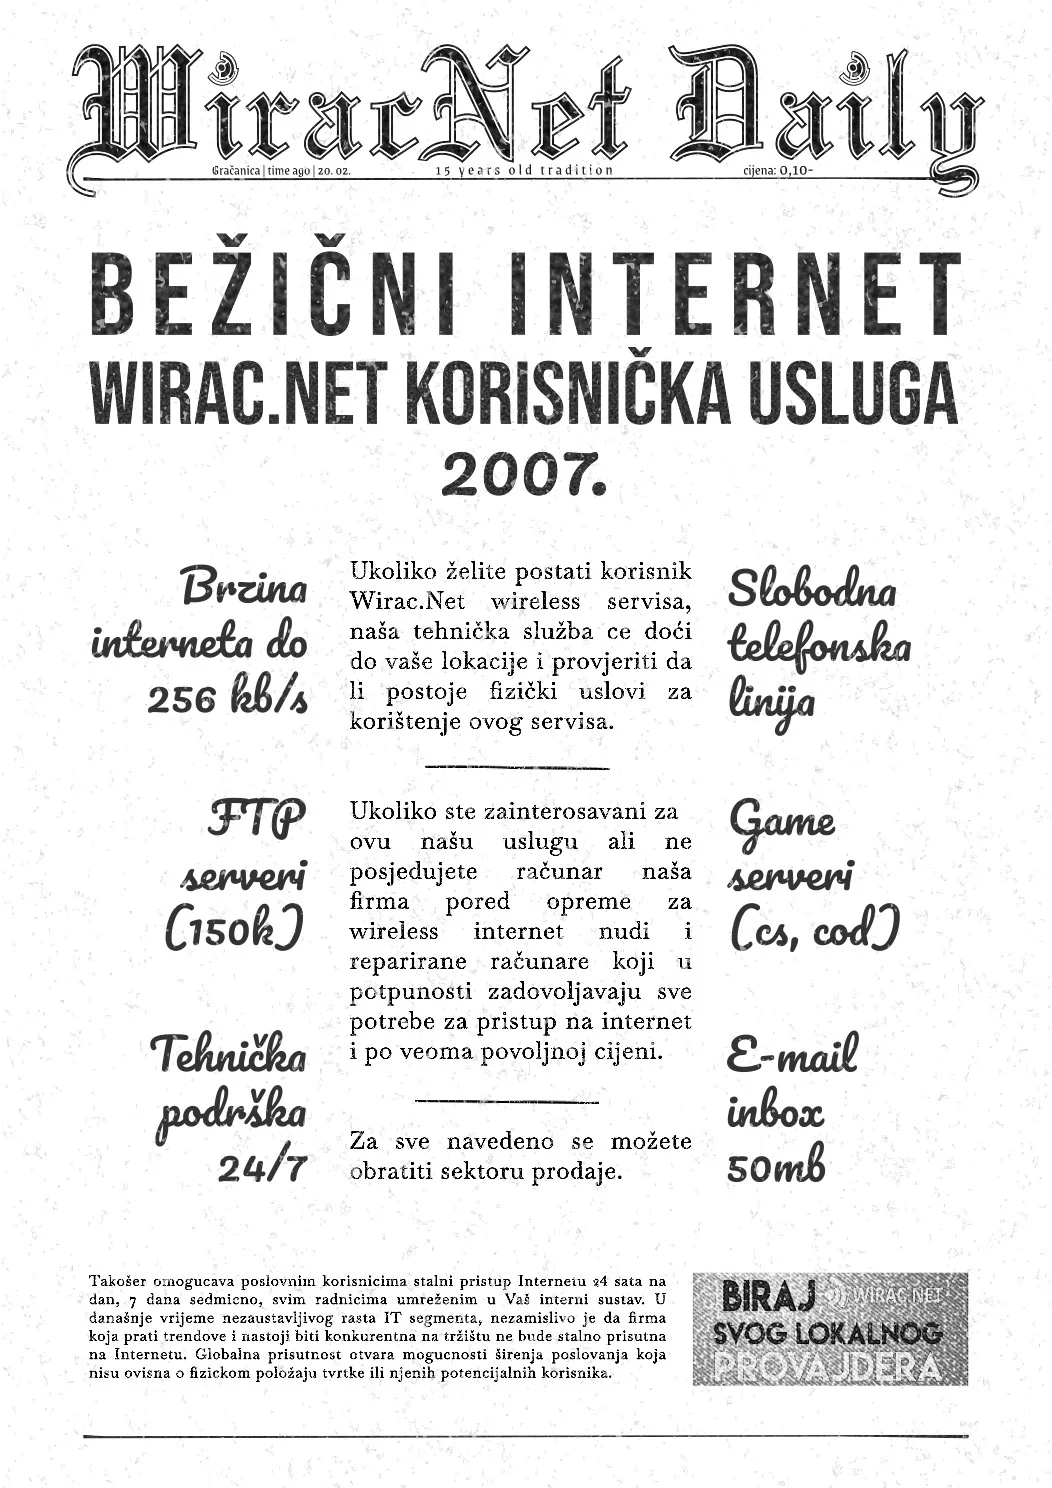 Spojen prvi korisnik na WiFi internet, 2007.